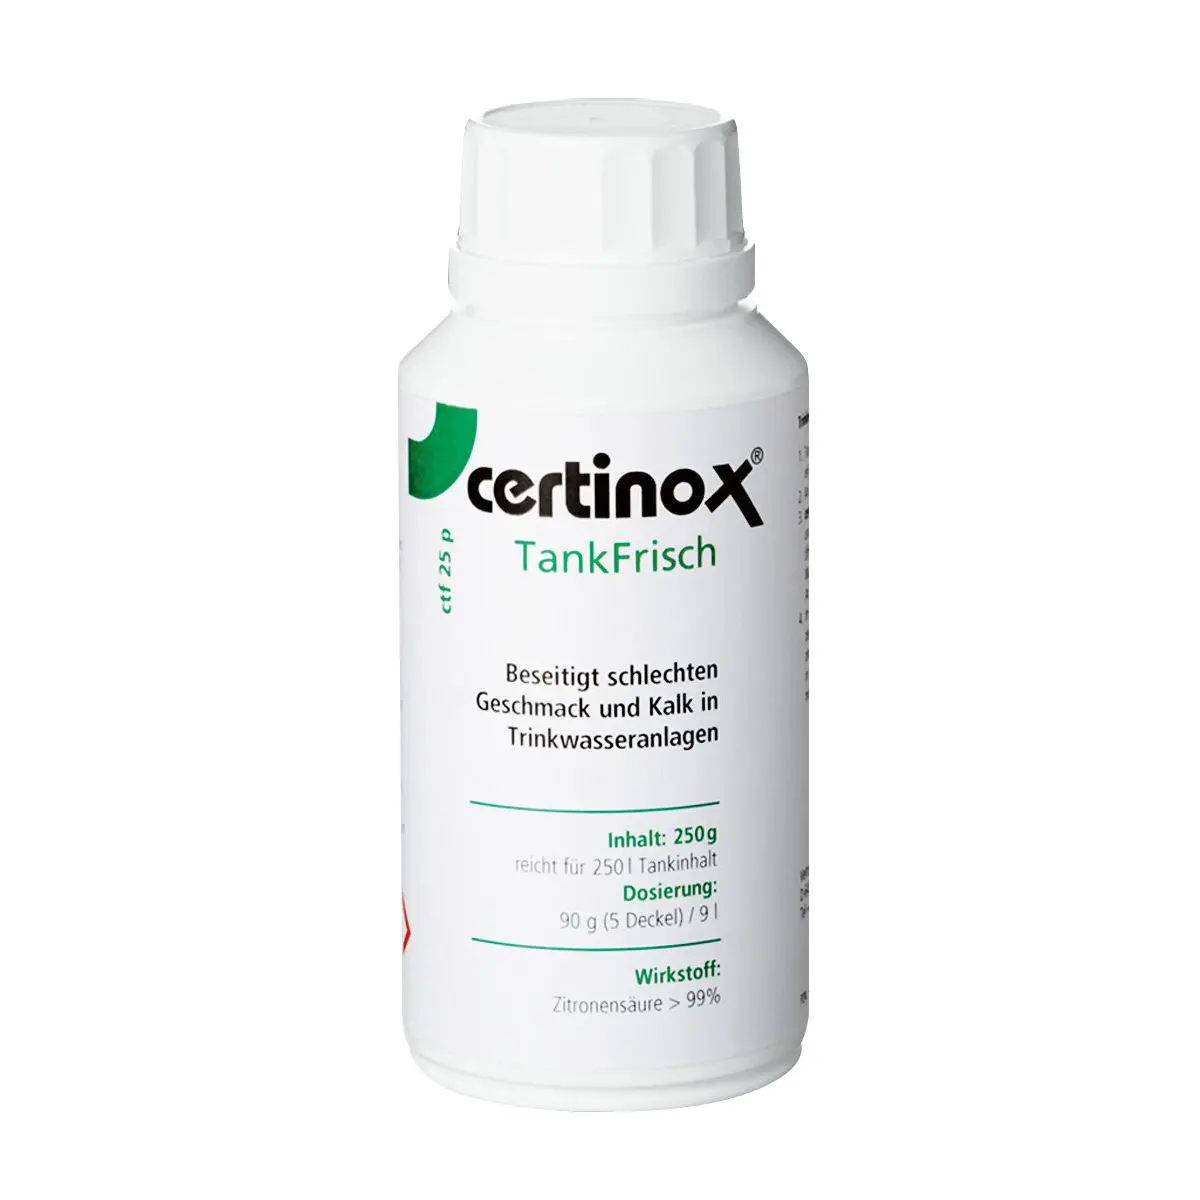 Certinox TankFrisch - ctf 25 p, 250 g por